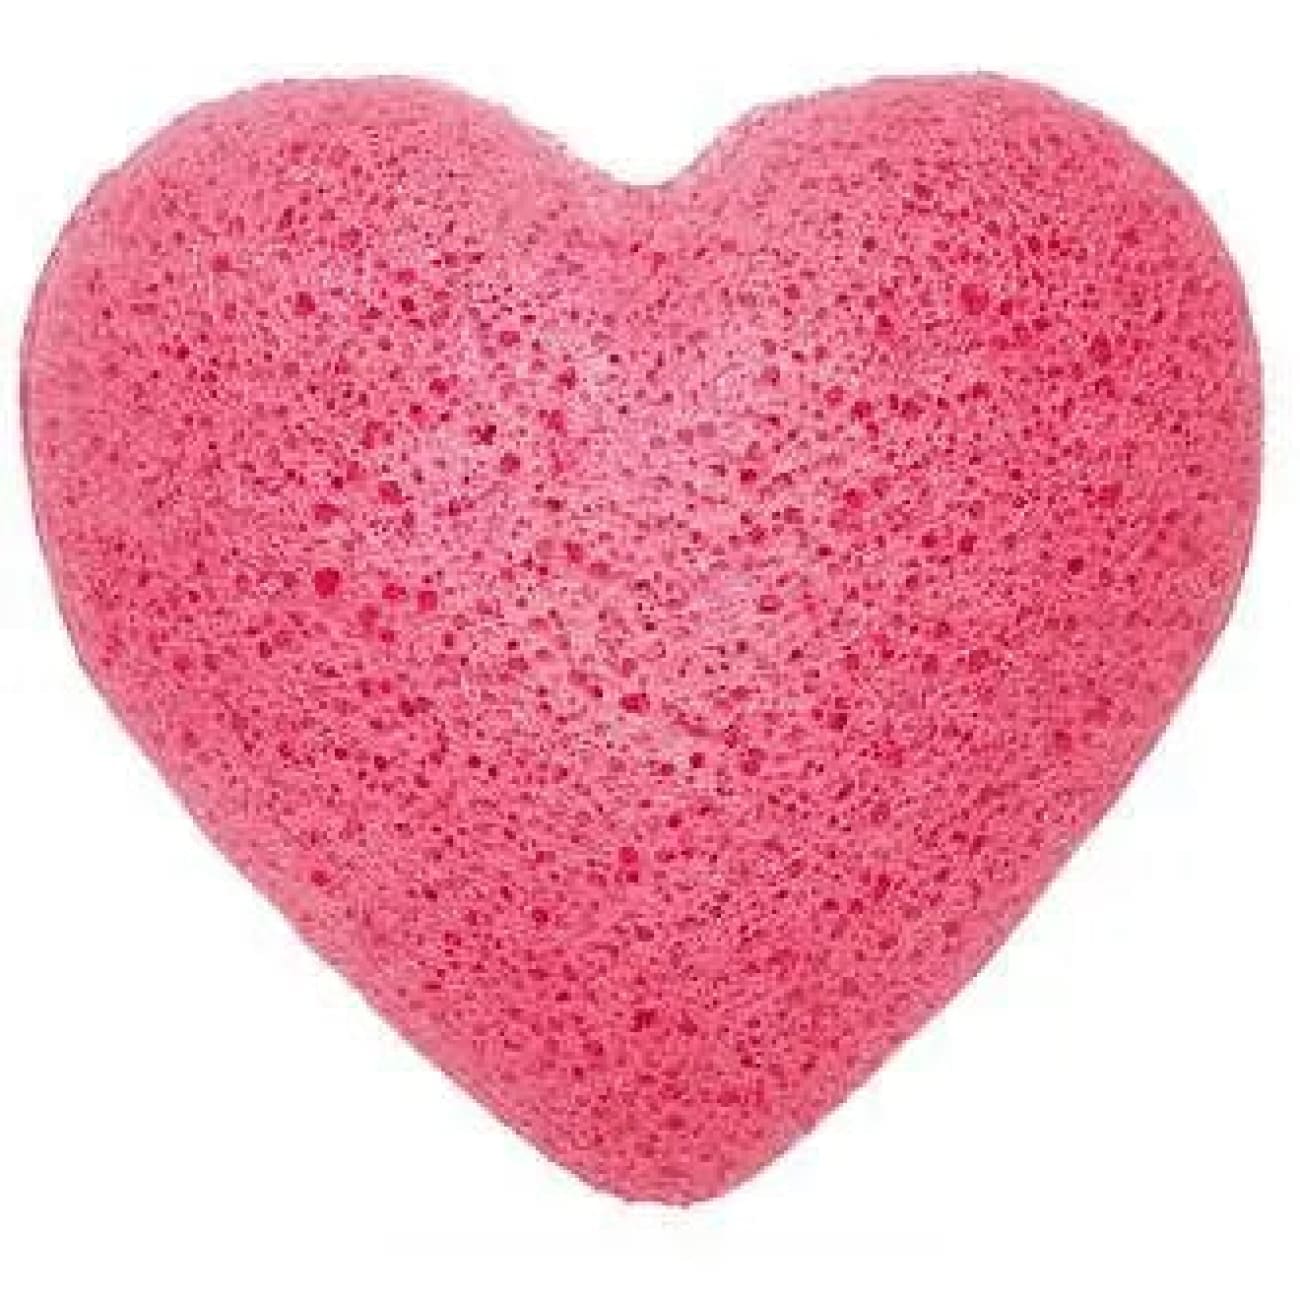 Konjac heart shaped Sponge Rose Rock Chocs 